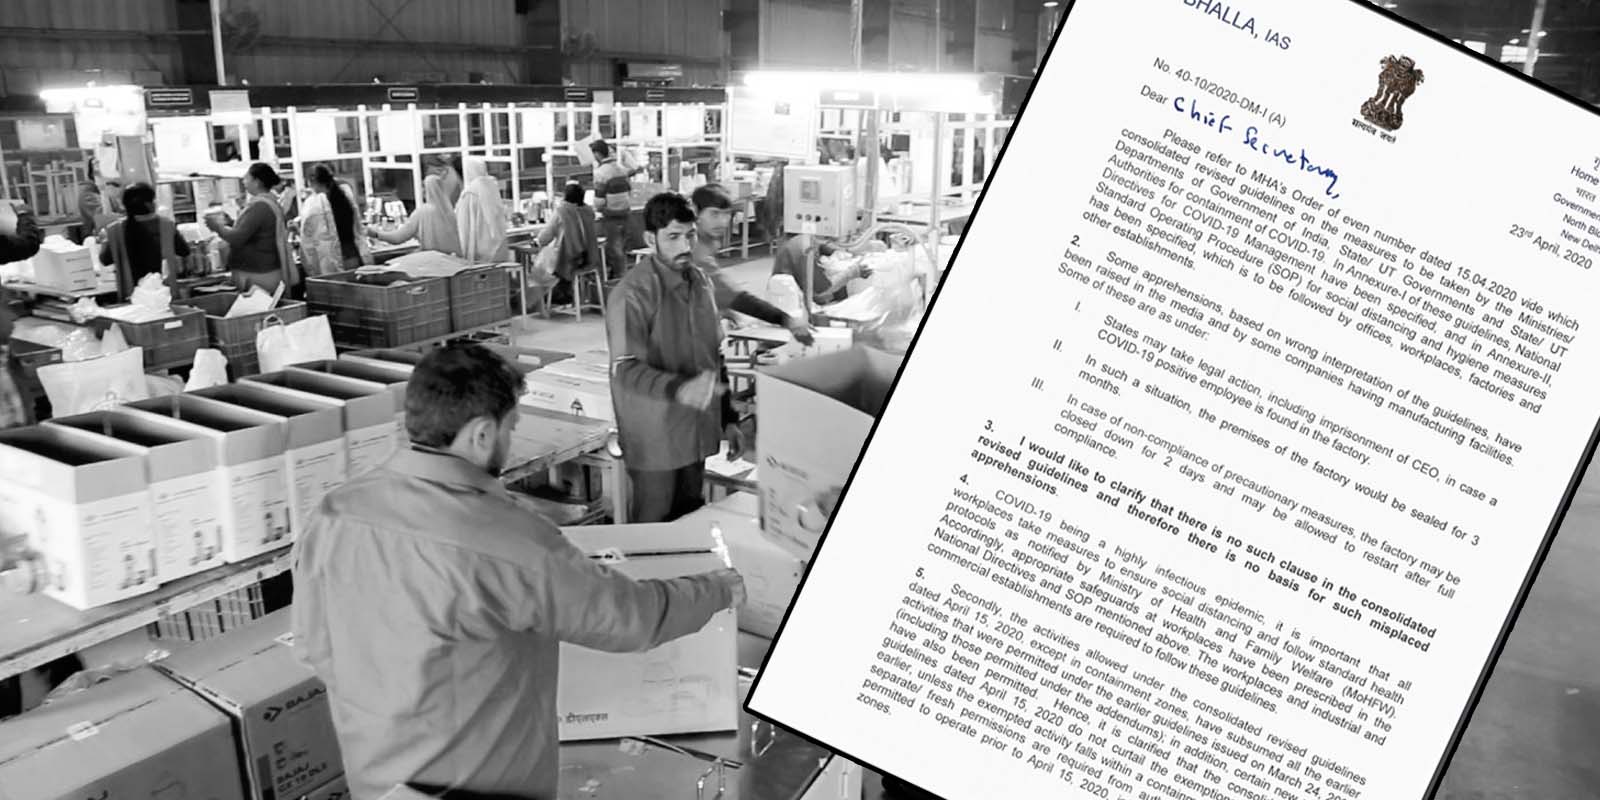 MHA clarification regarding covid-19 worker in factory